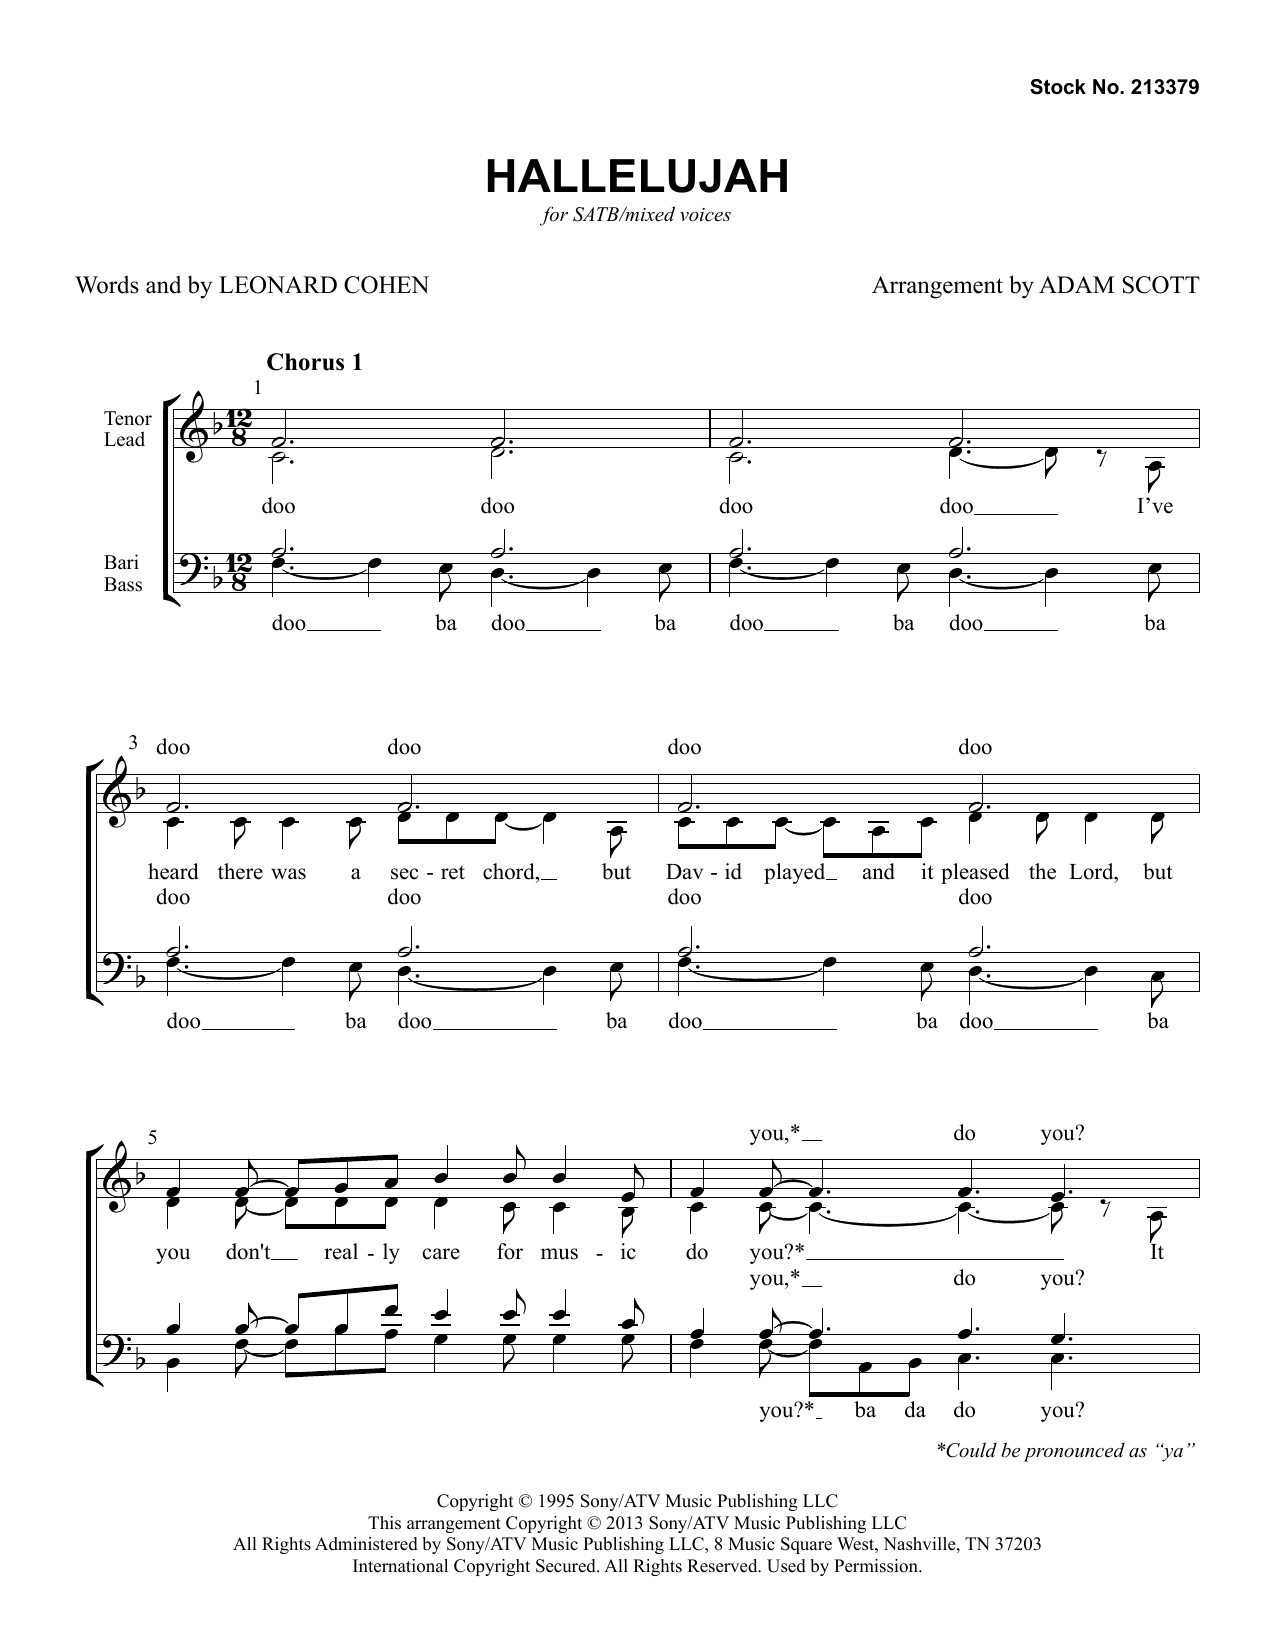 John Cale Hallelujah (arr. Adam Scott) Sheet Music Notes & Chords for SSA Choir - Download or Print PDF